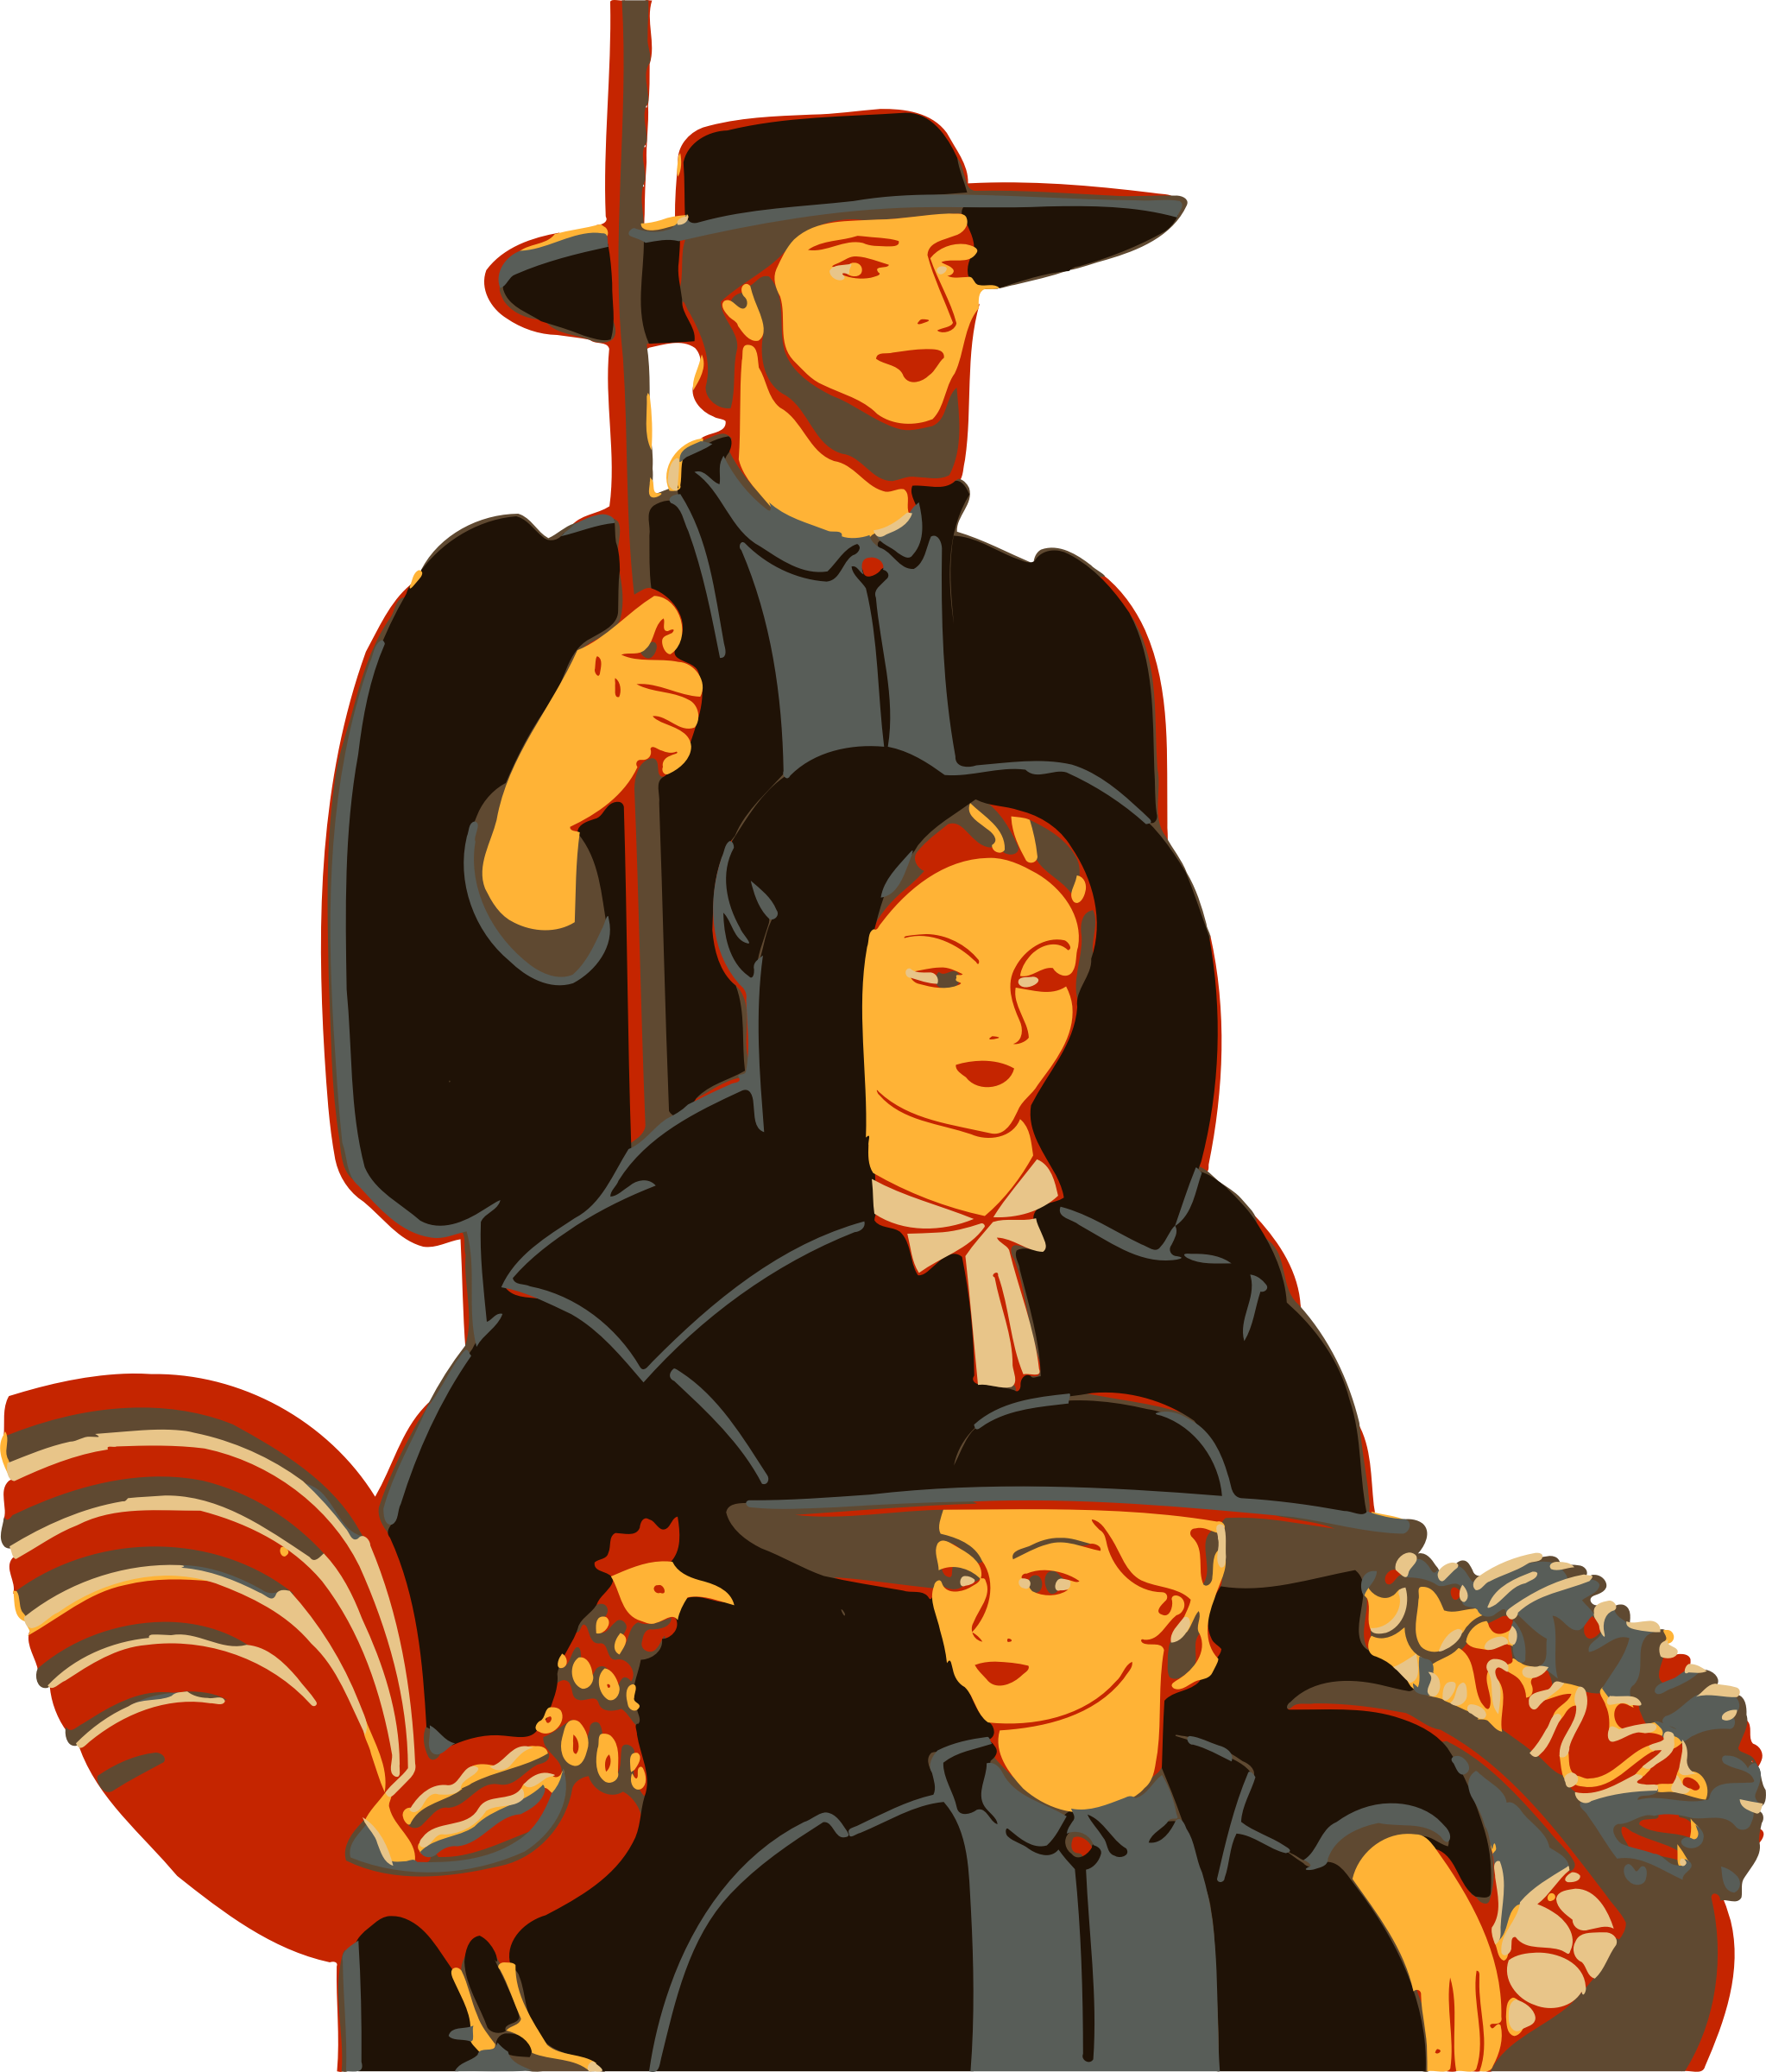 Amish Family Vector Clipart image - Free stock photo - Public Domain